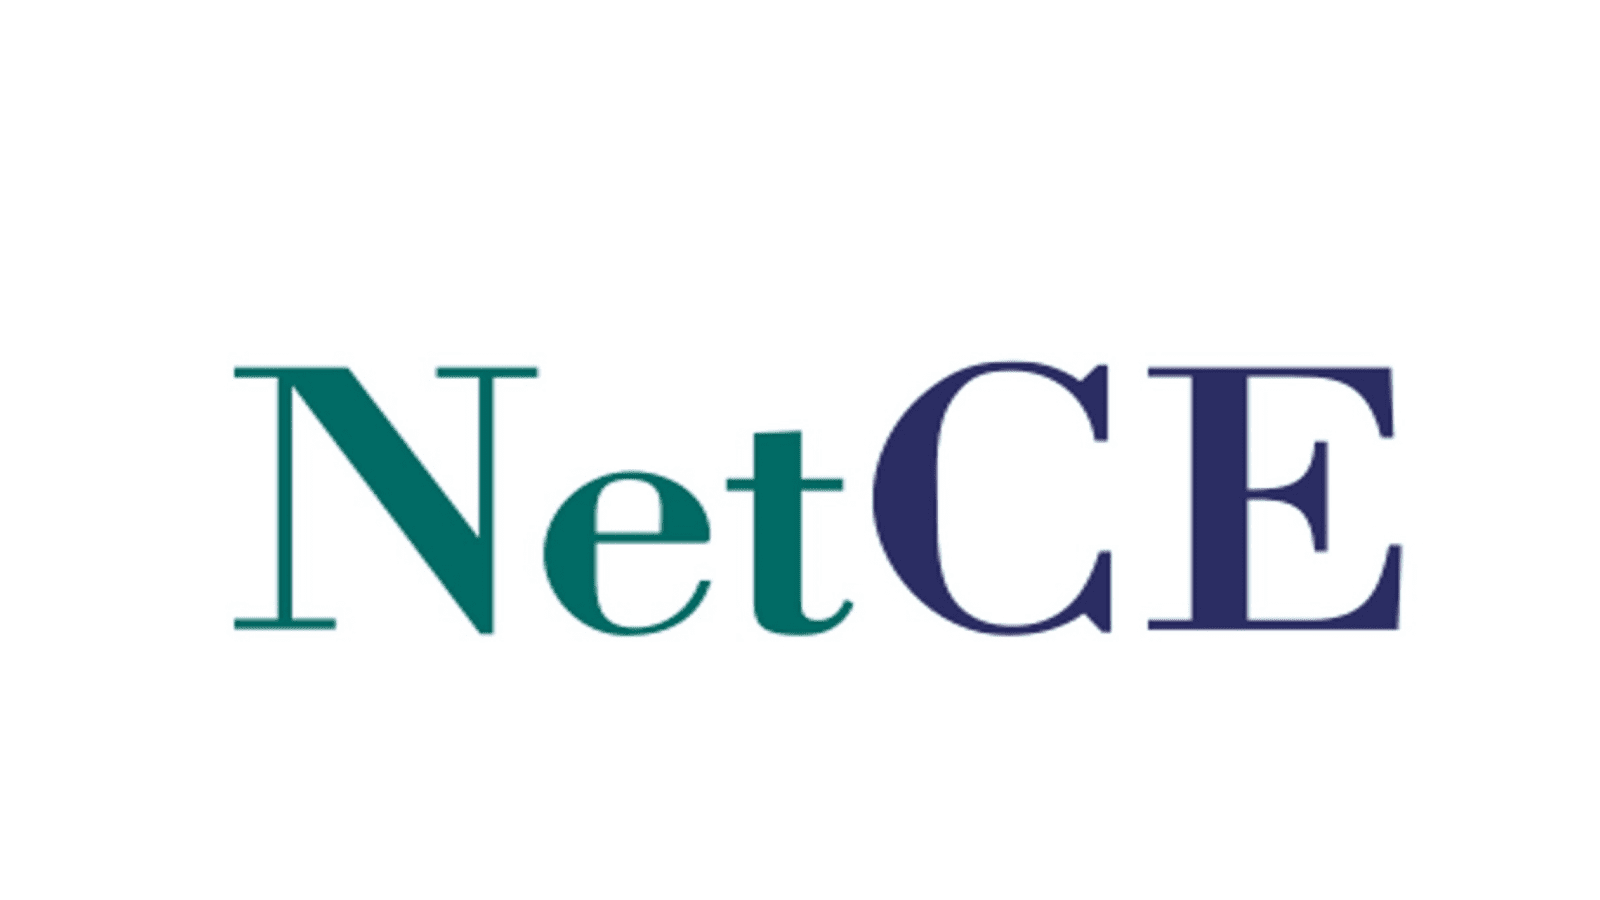 Netce logo